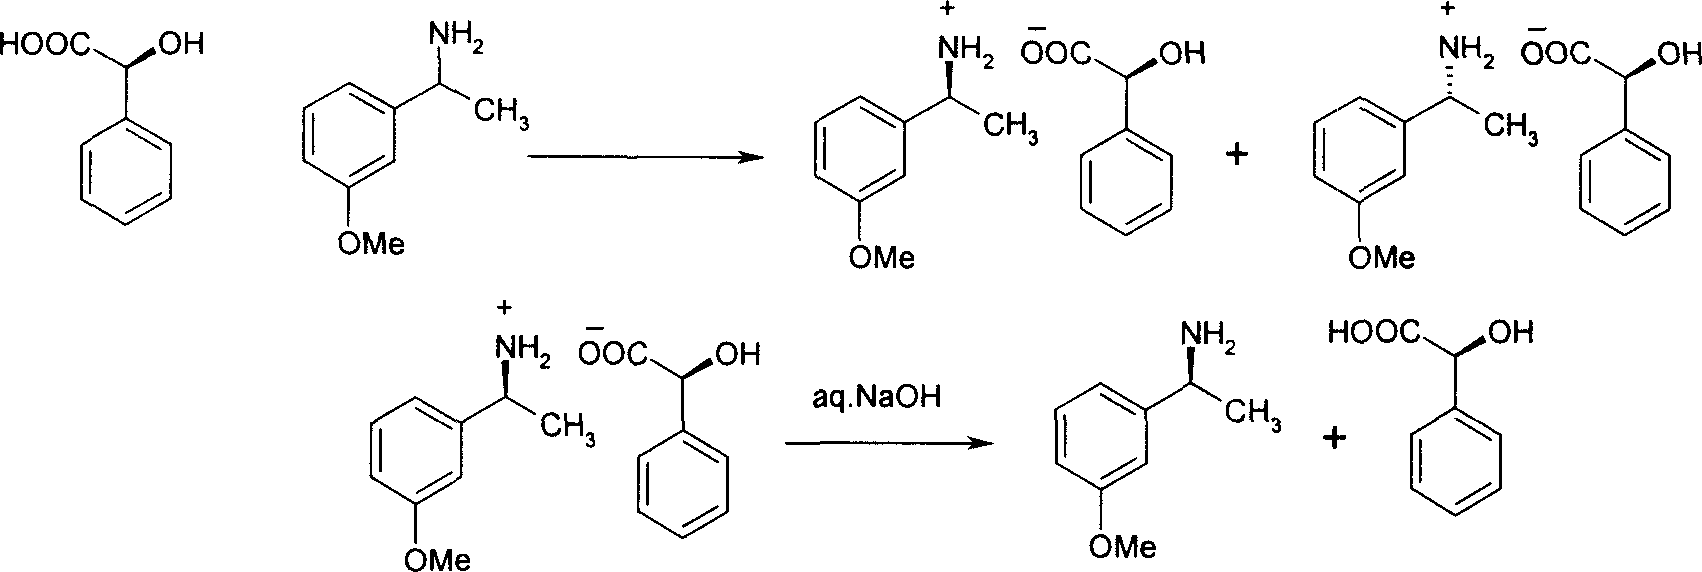 Method for preparing optical active 1-(3-methoxy phenyl) ethylamine